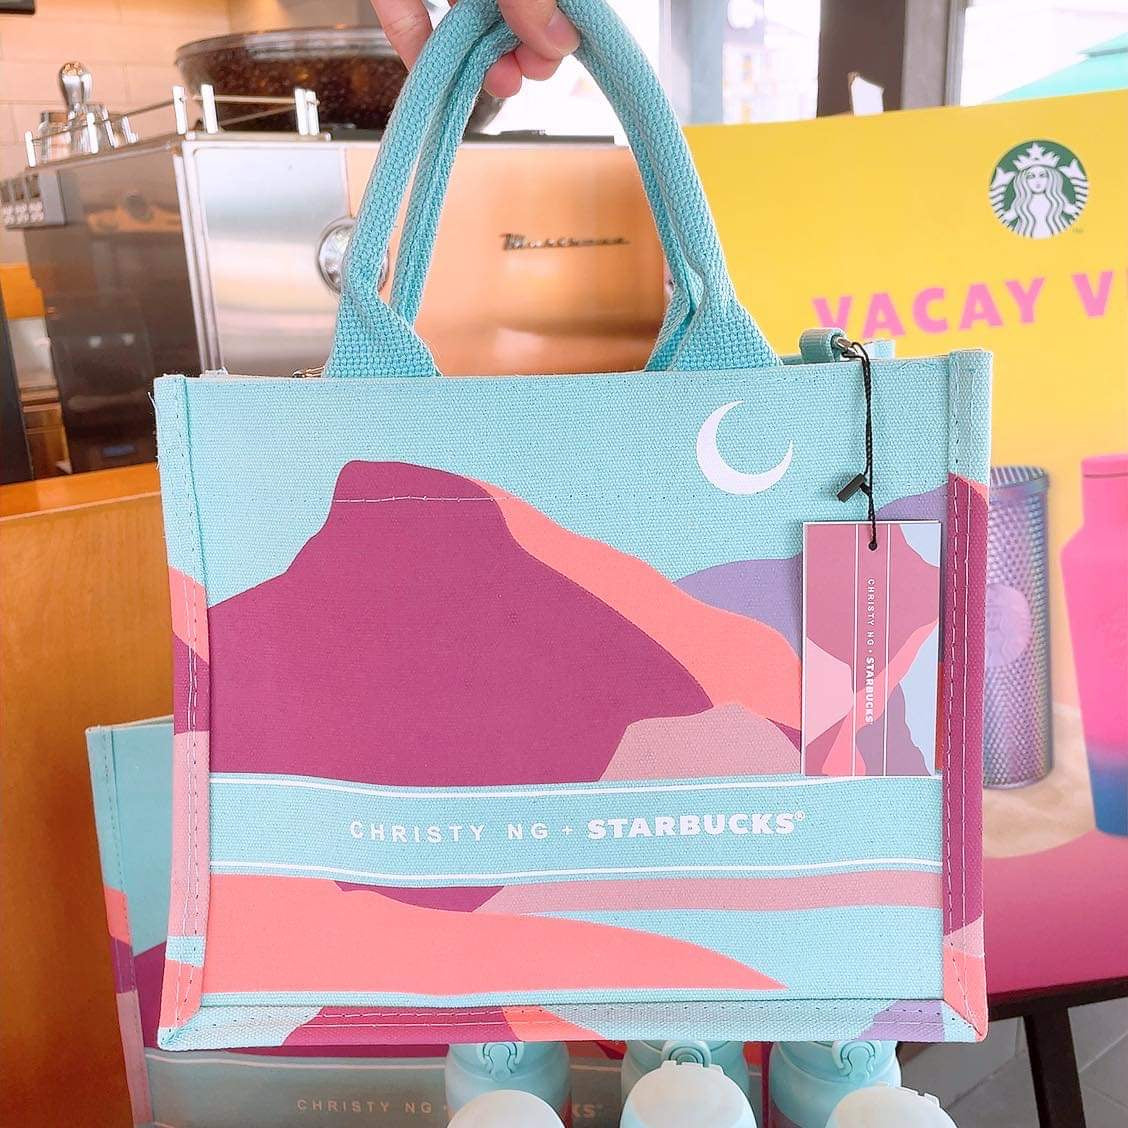 Starbucks x Christy Ng Tote Bag